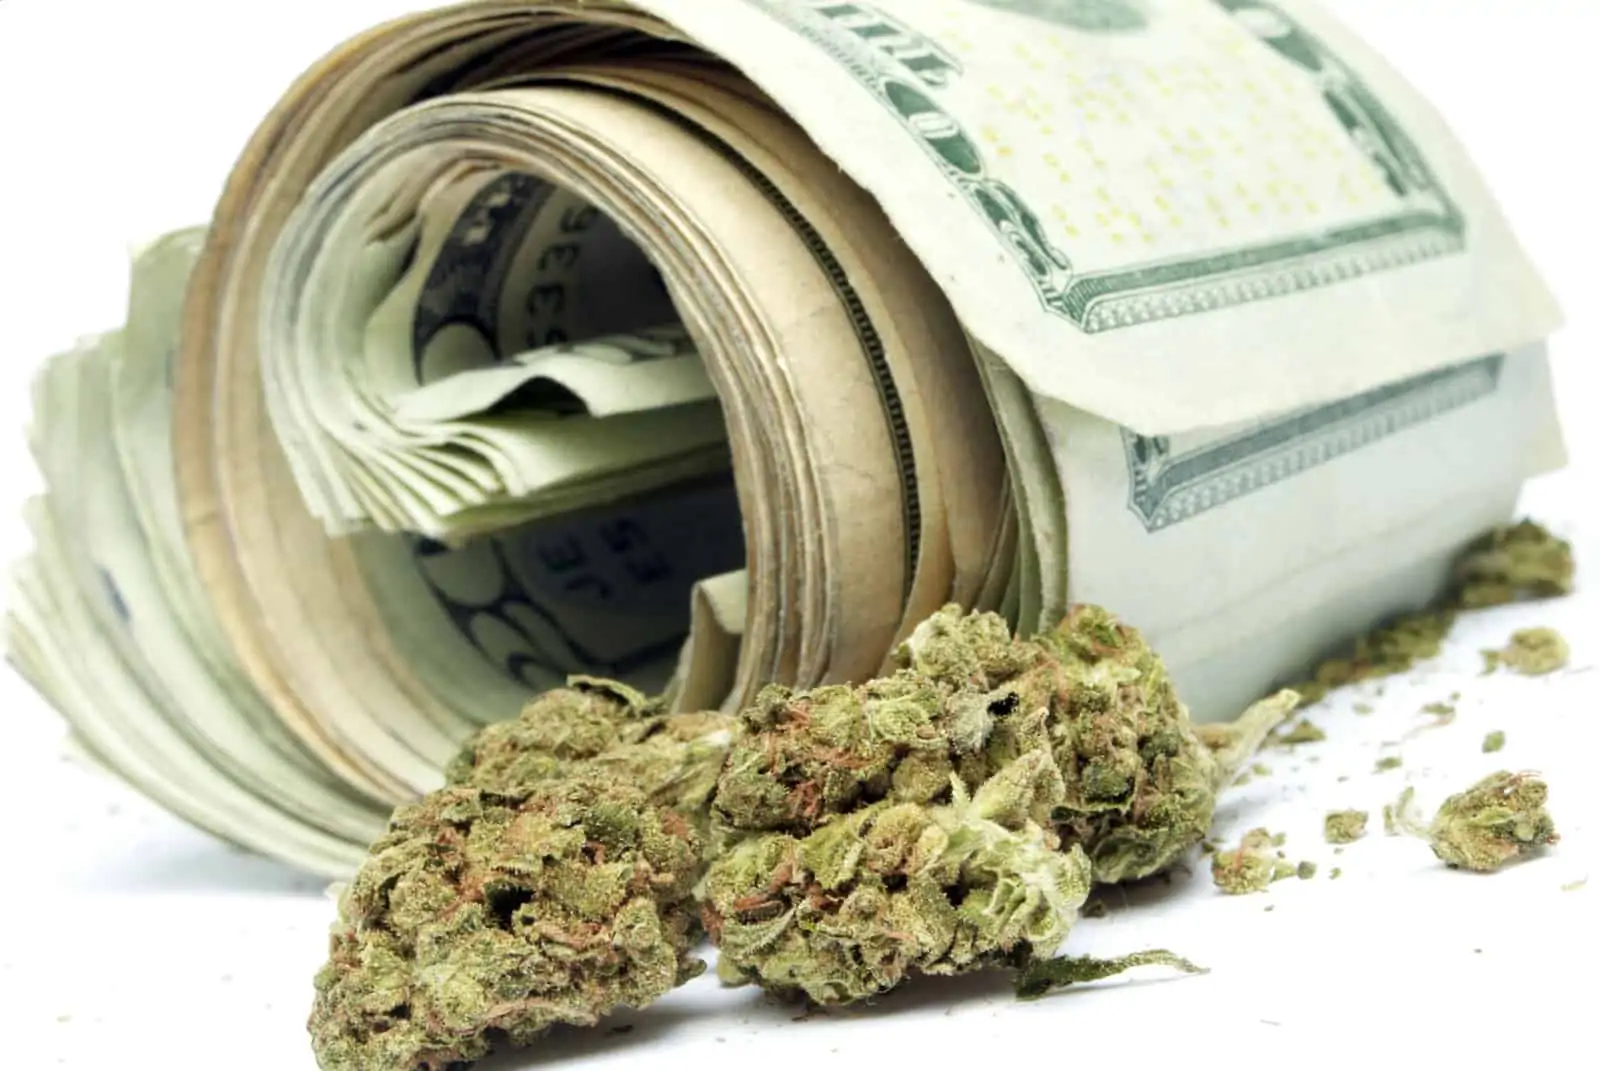 Aurora, Colorado Is Helping Homeless Residents With Its Marijuana Tax Revenue